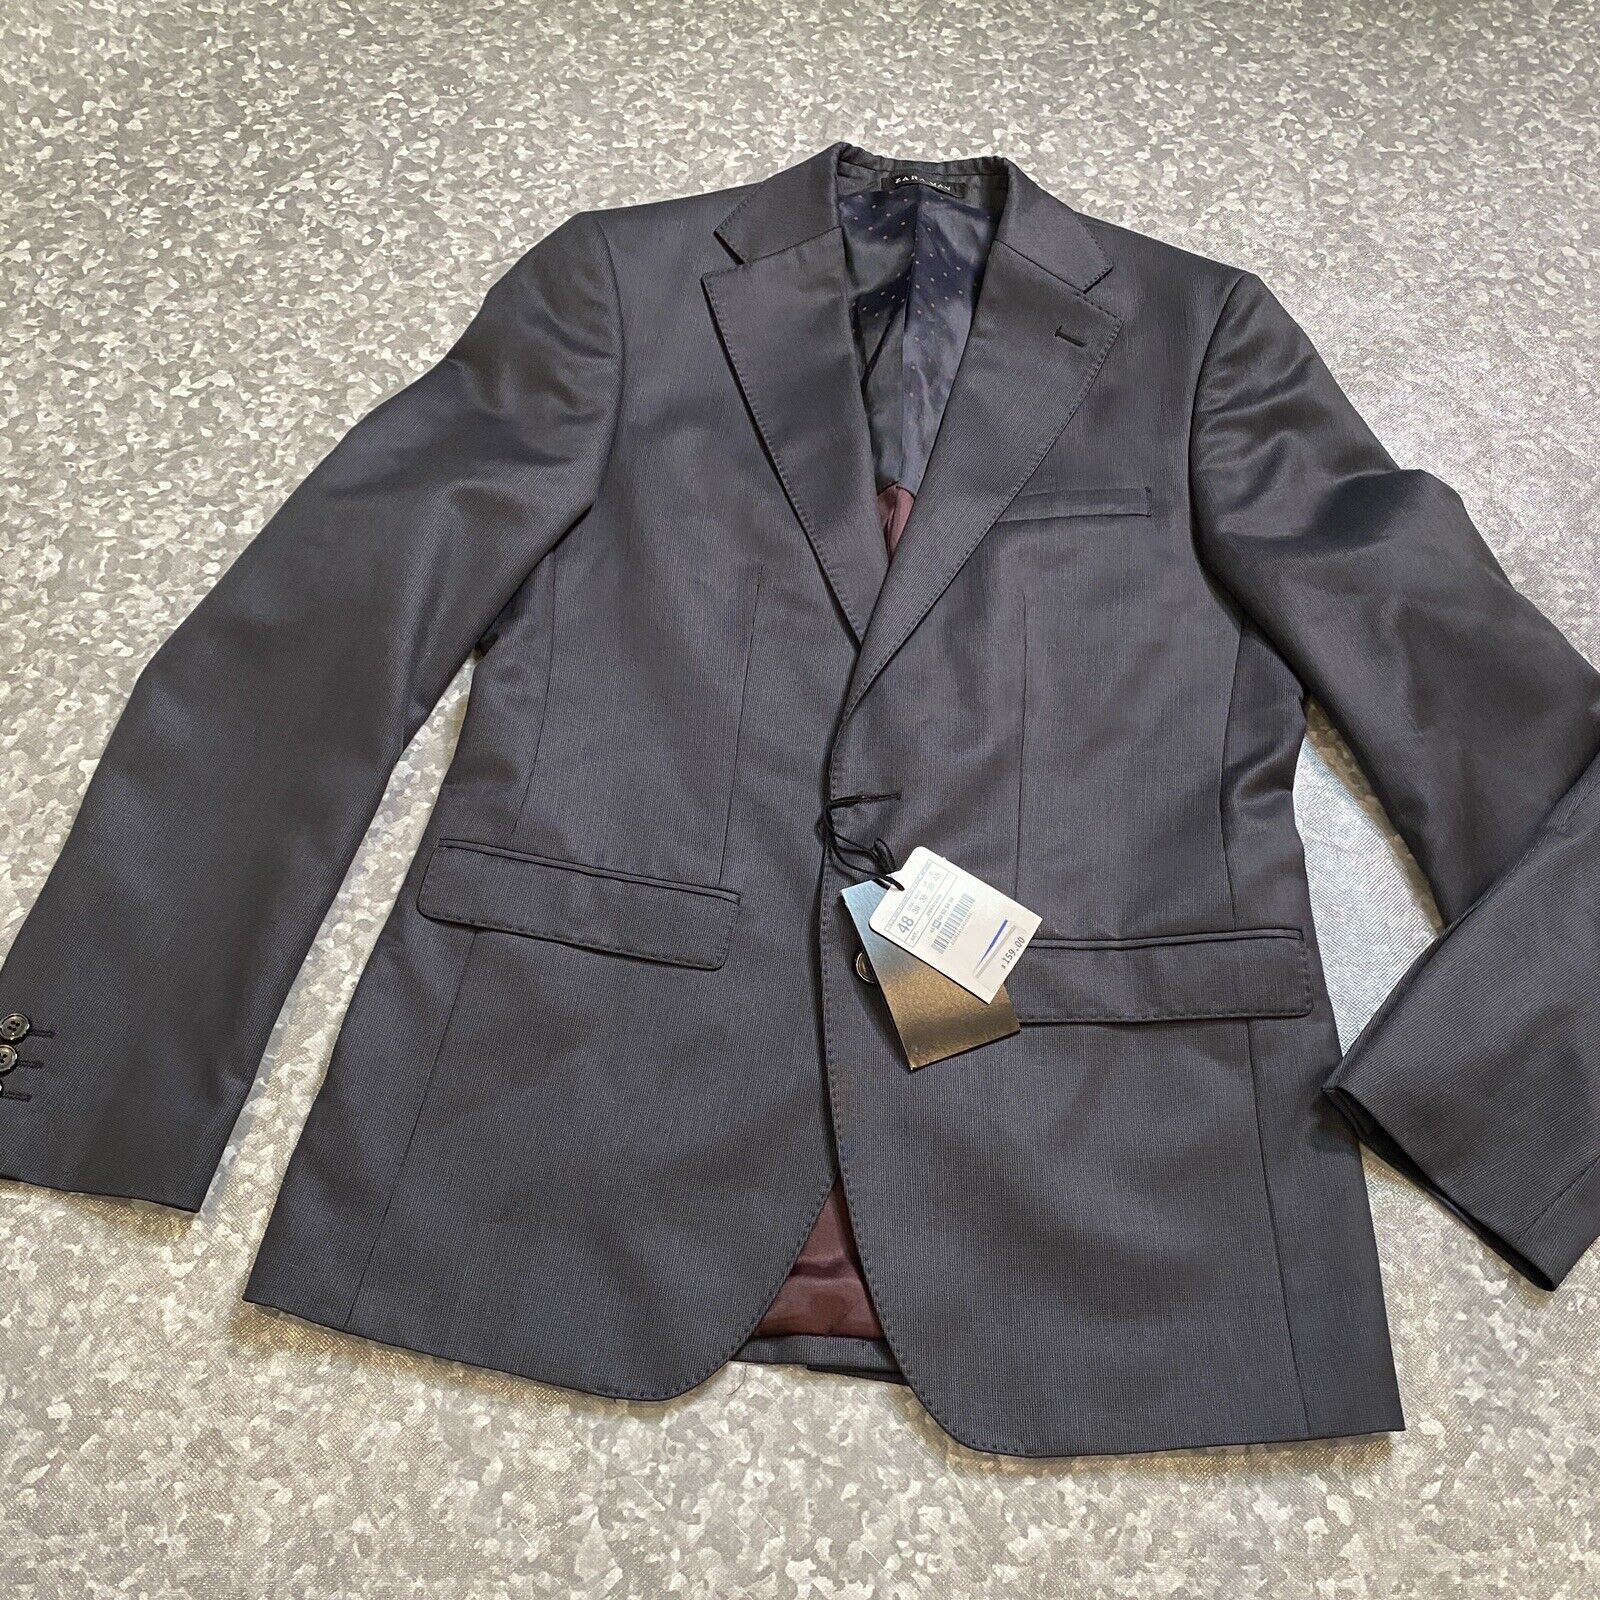 Zara Mens Blazer Jacket Suit Coat US 38 Gray Classic Fit NWT